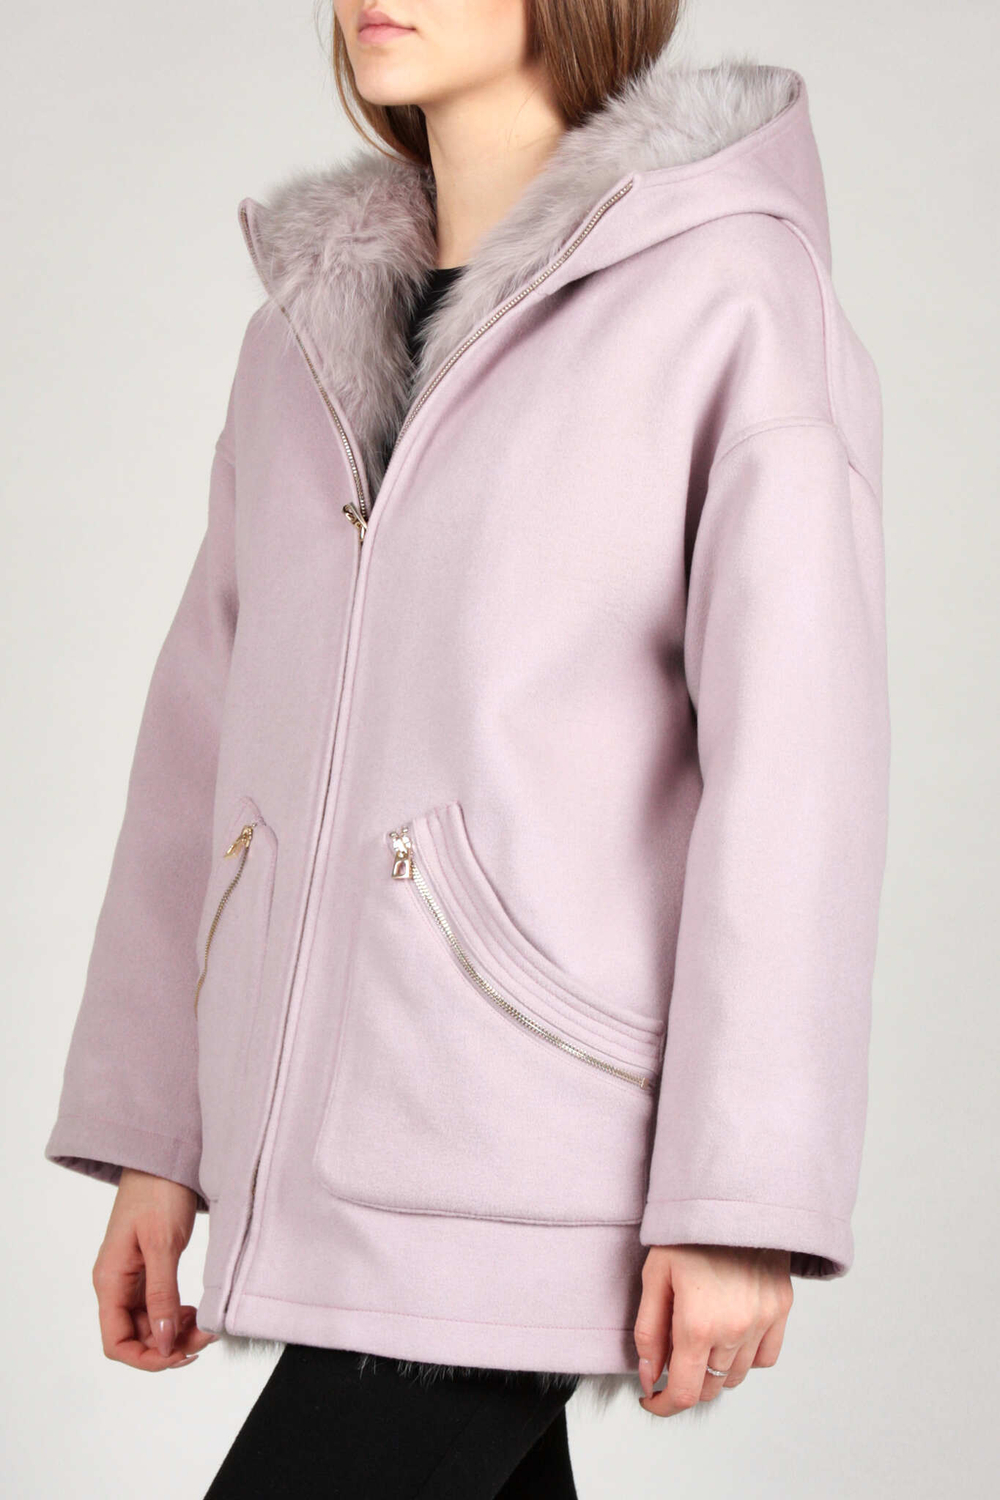 Пальто жен. DIEGO M 523 розовое лиса